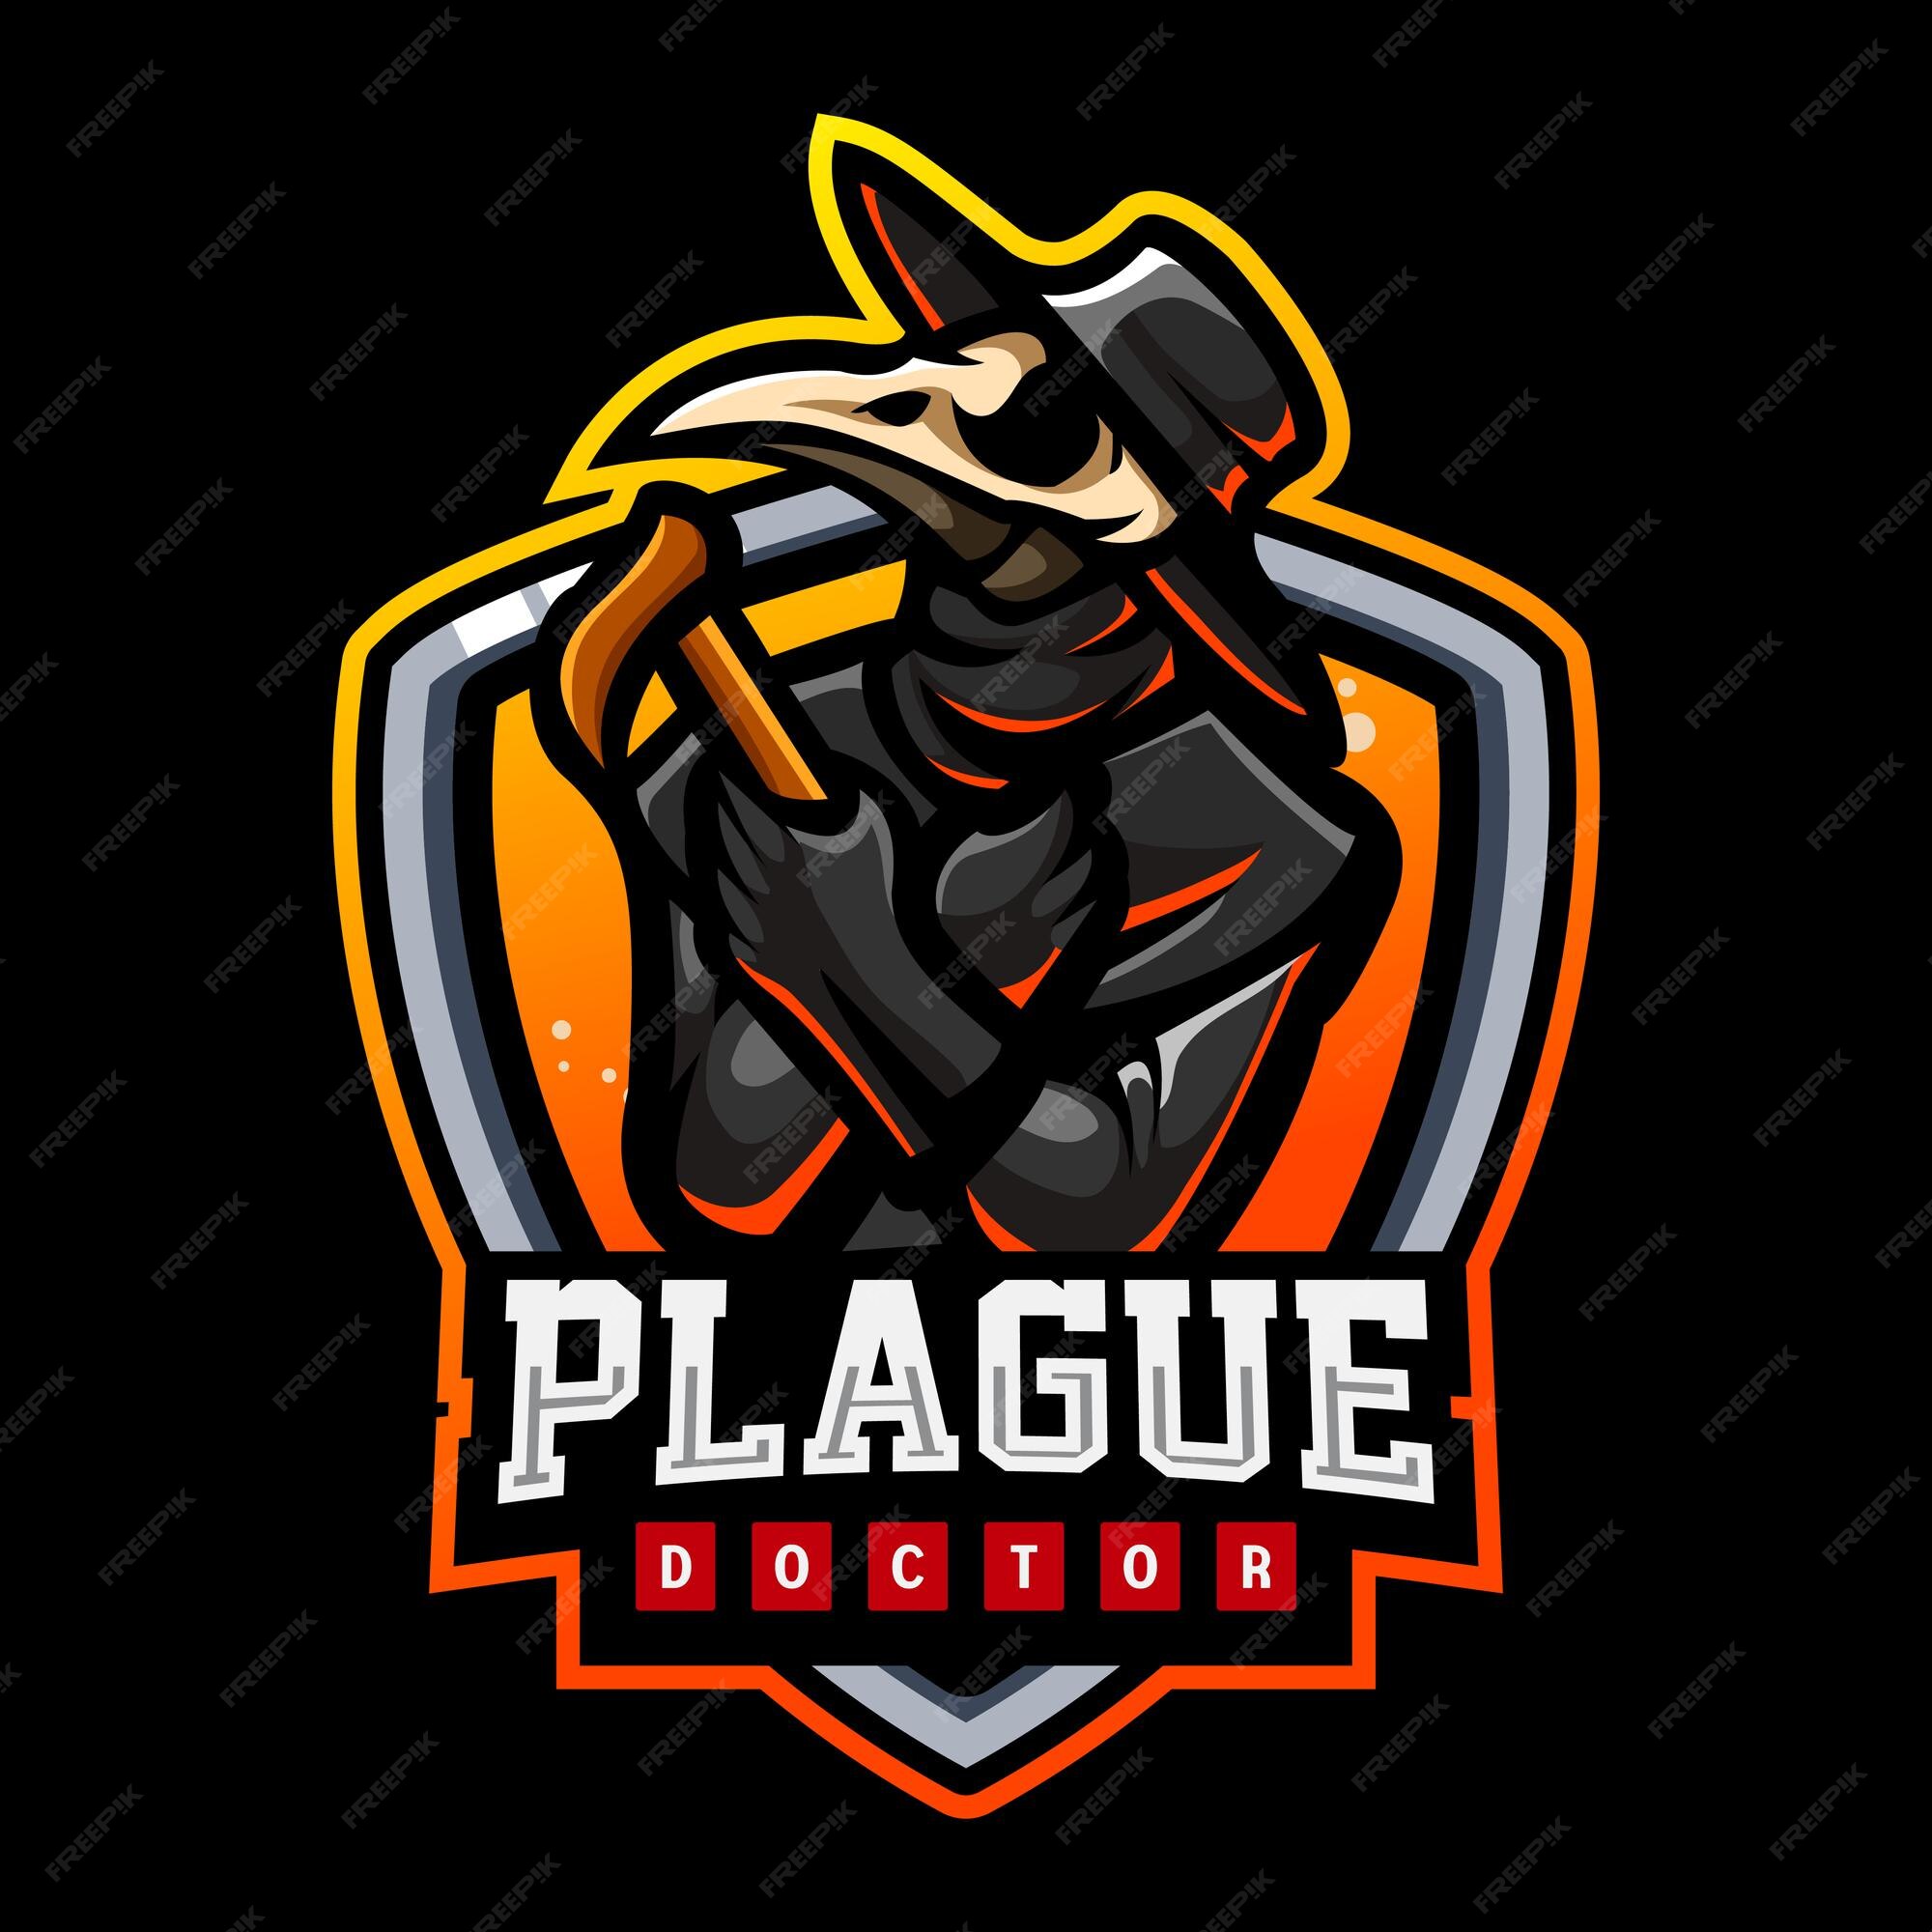 Plague esport logo mascot design Royalty Free Vector Image